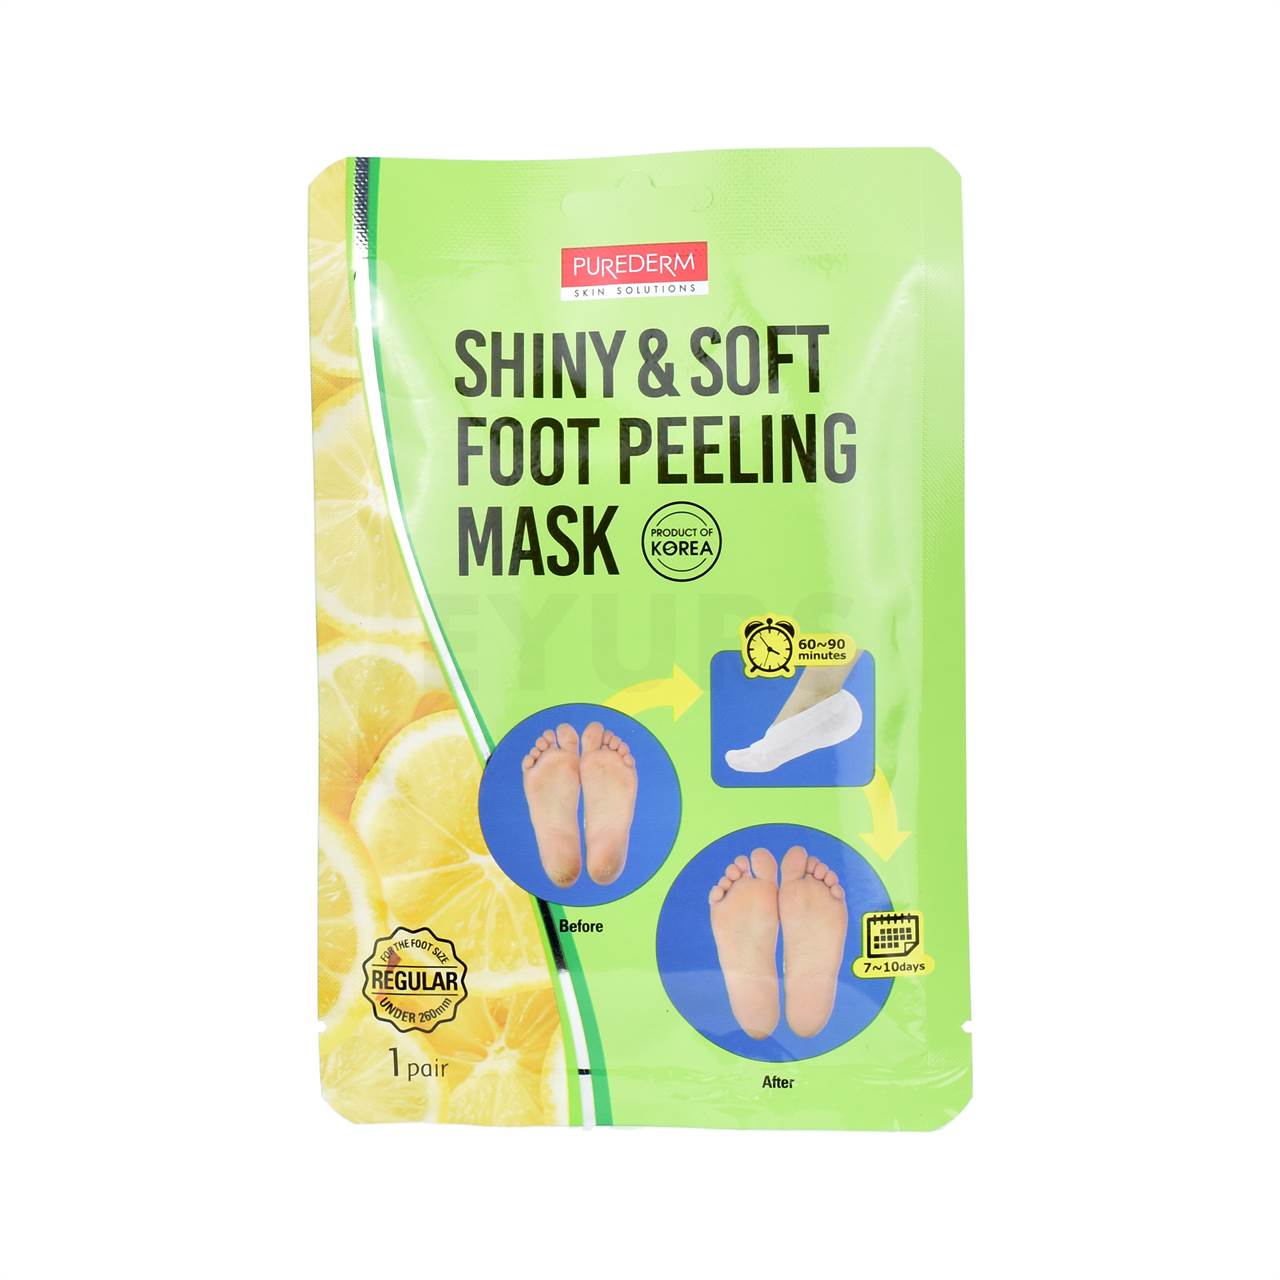 purederm shiny soft foot peeling mask